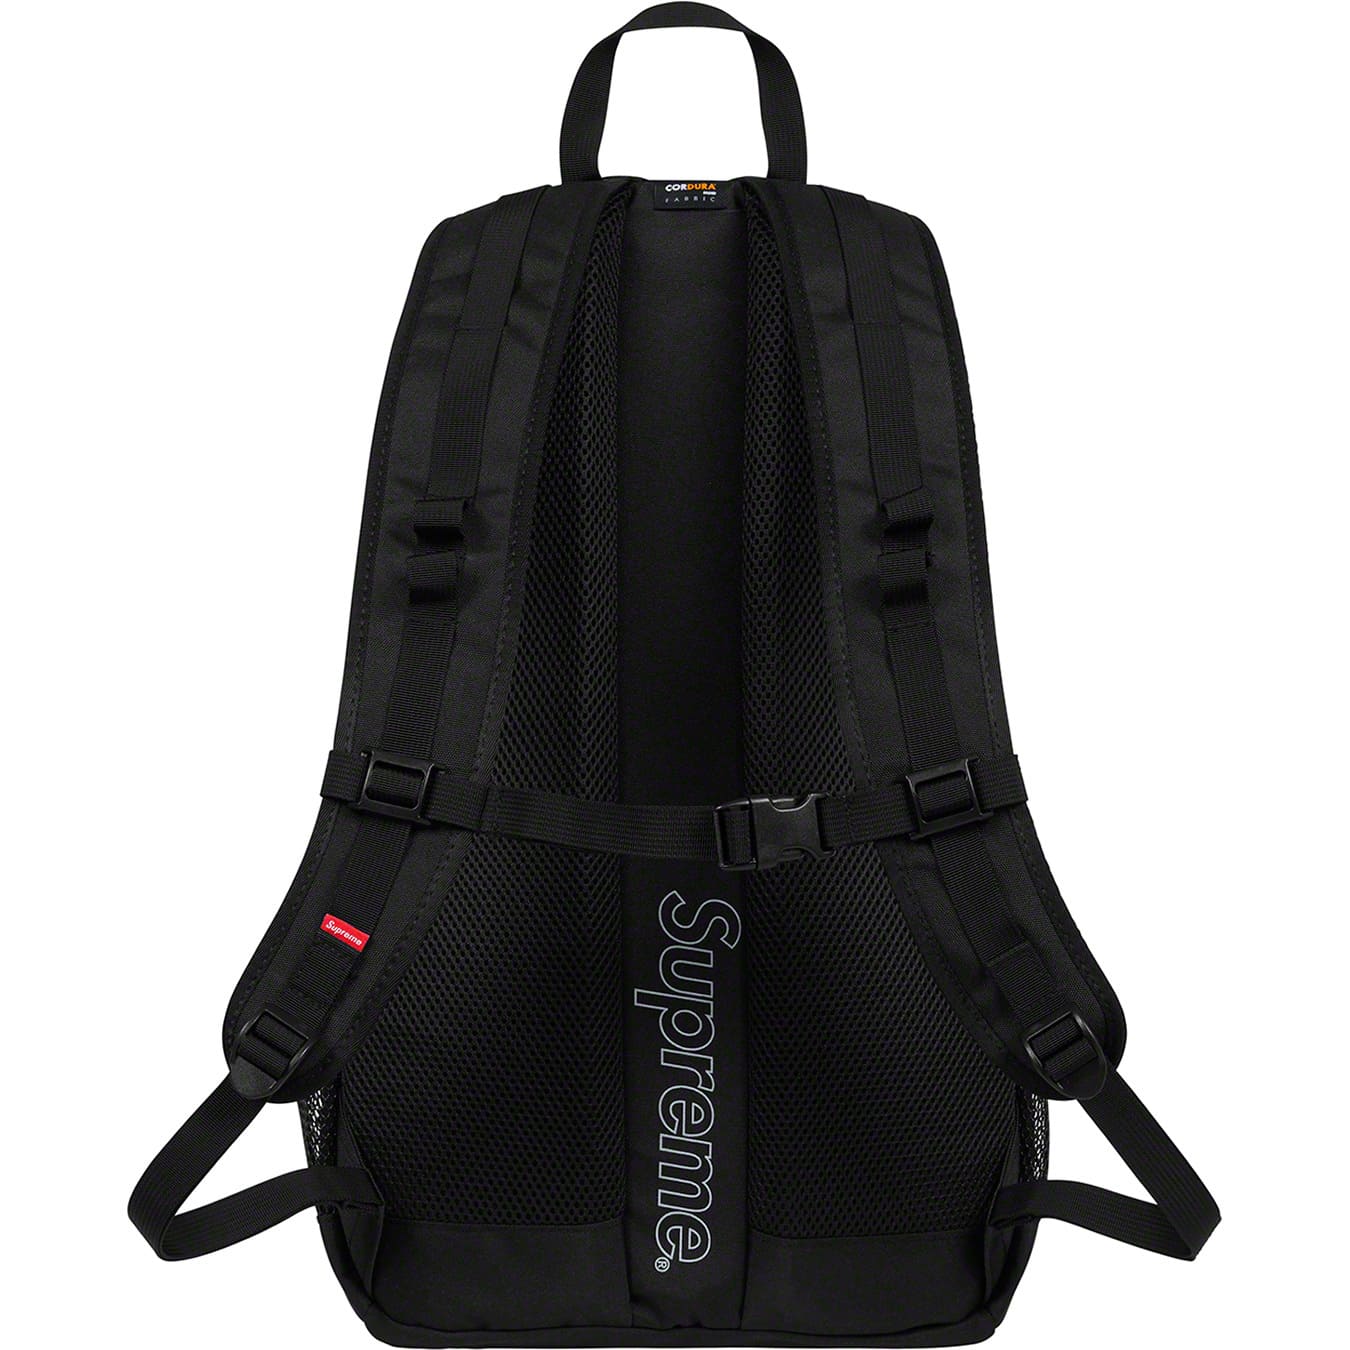 Supreme Backpack